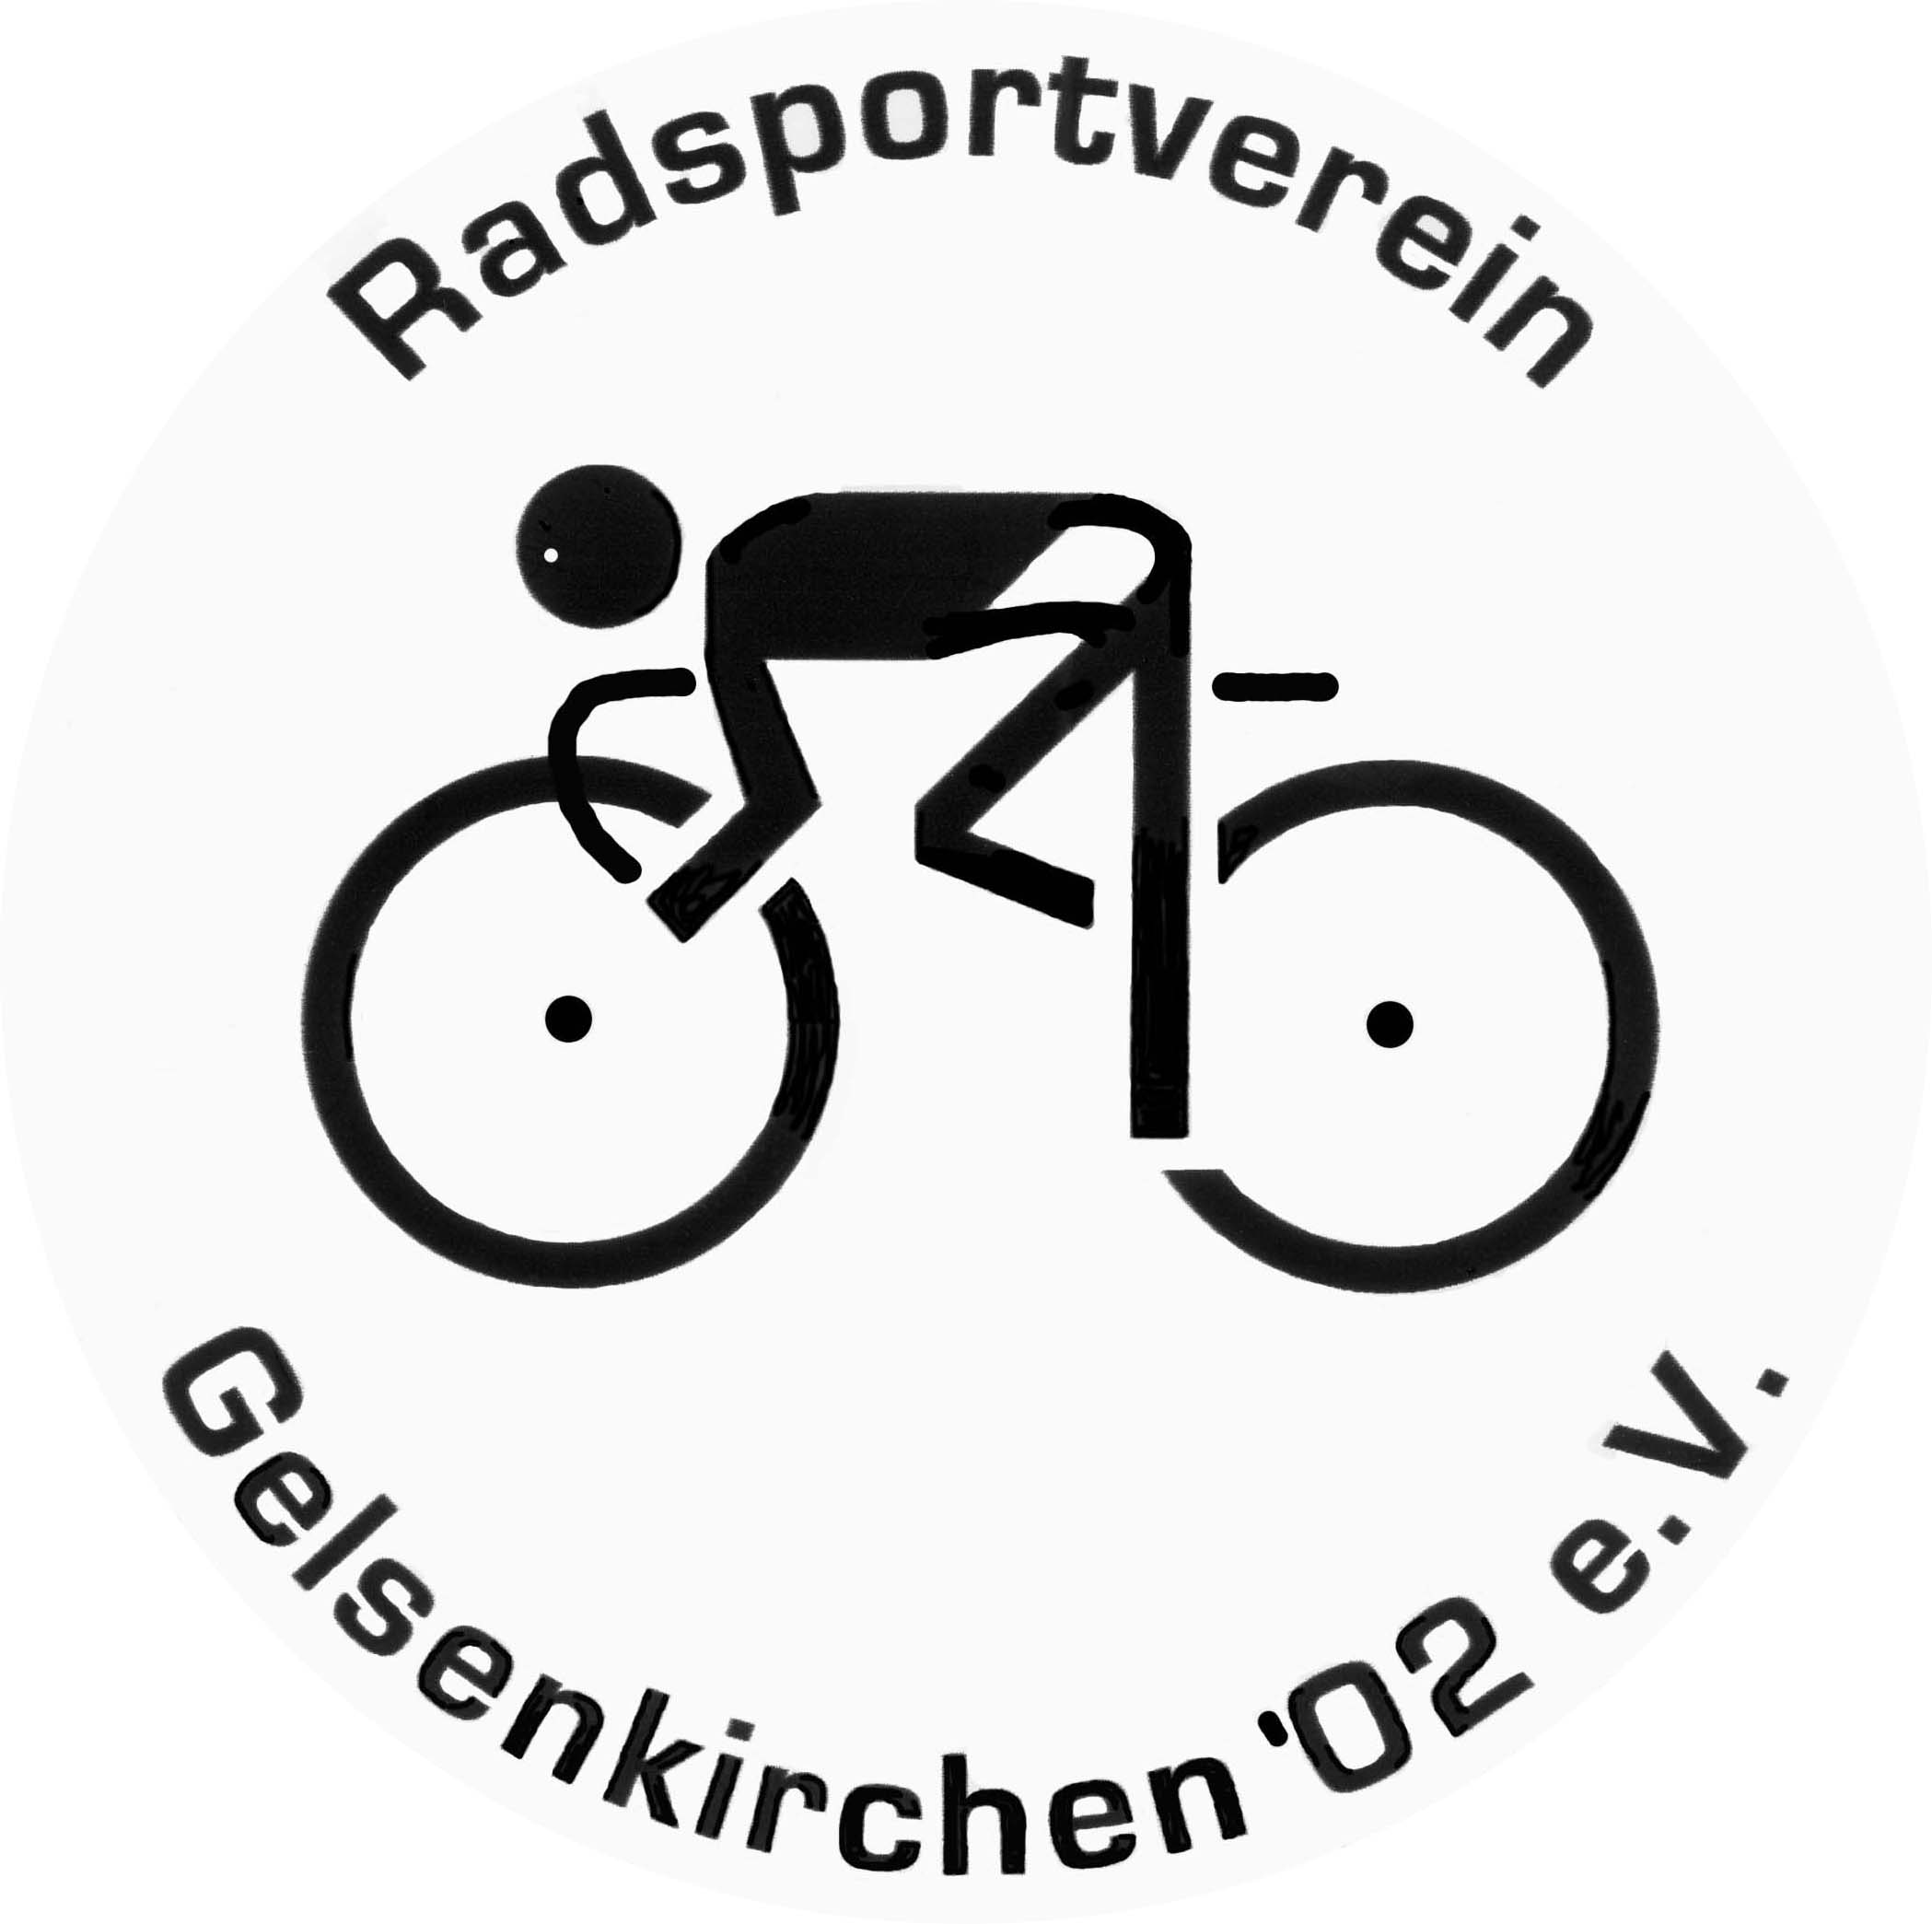 Radsportverein Gelsenkirchen ´02 e.V.